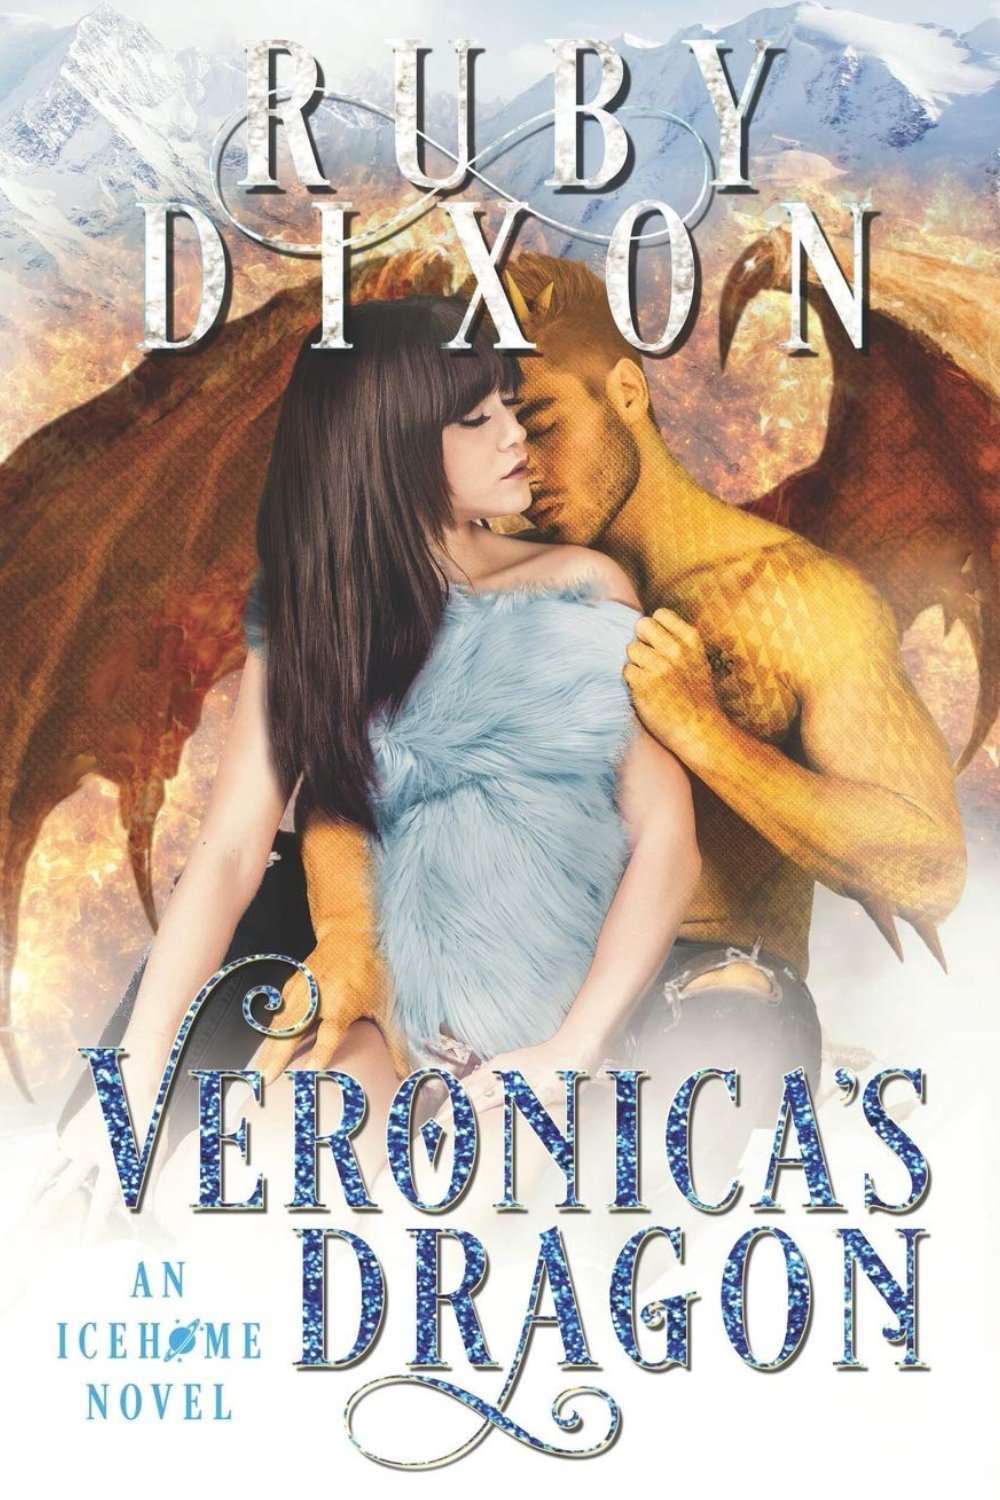 S2 E13 Veronica’s Dragon by Ruby Dixon + Dragon Shifter Recommendations